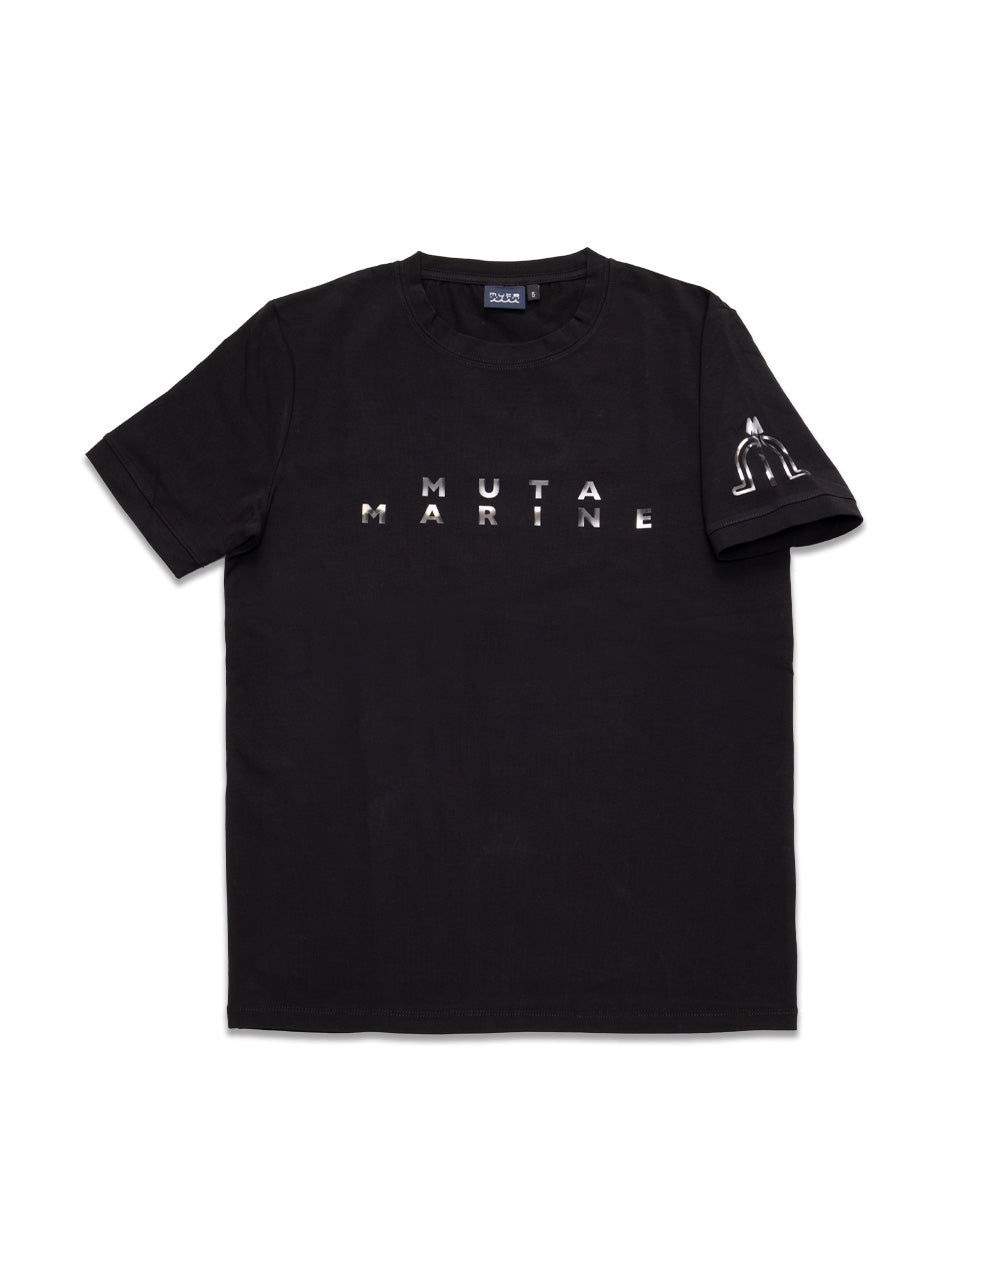 BACK TWIN WAVE FILM Tシャツ [全3色] – muta Online Store